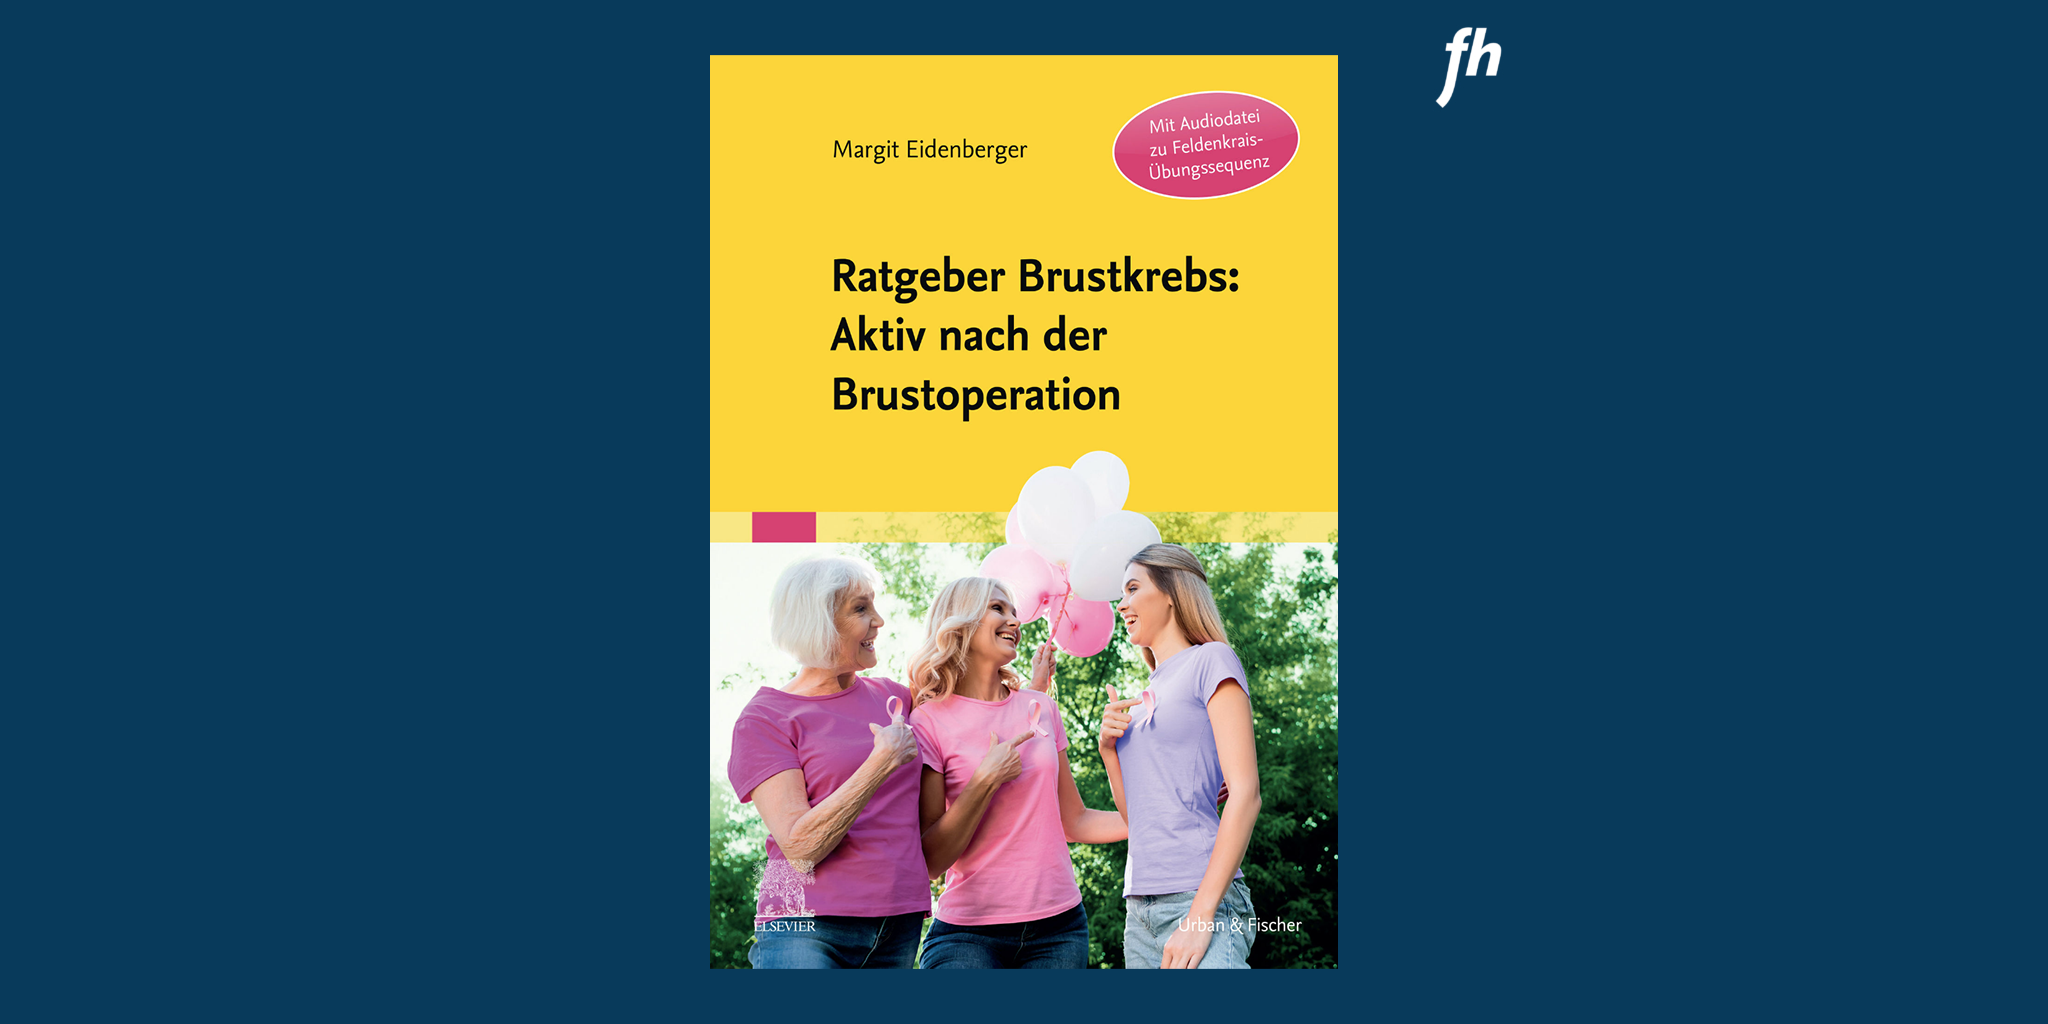 Buchcover Ratgeber Brustkrebs, Margit Eidenberger 